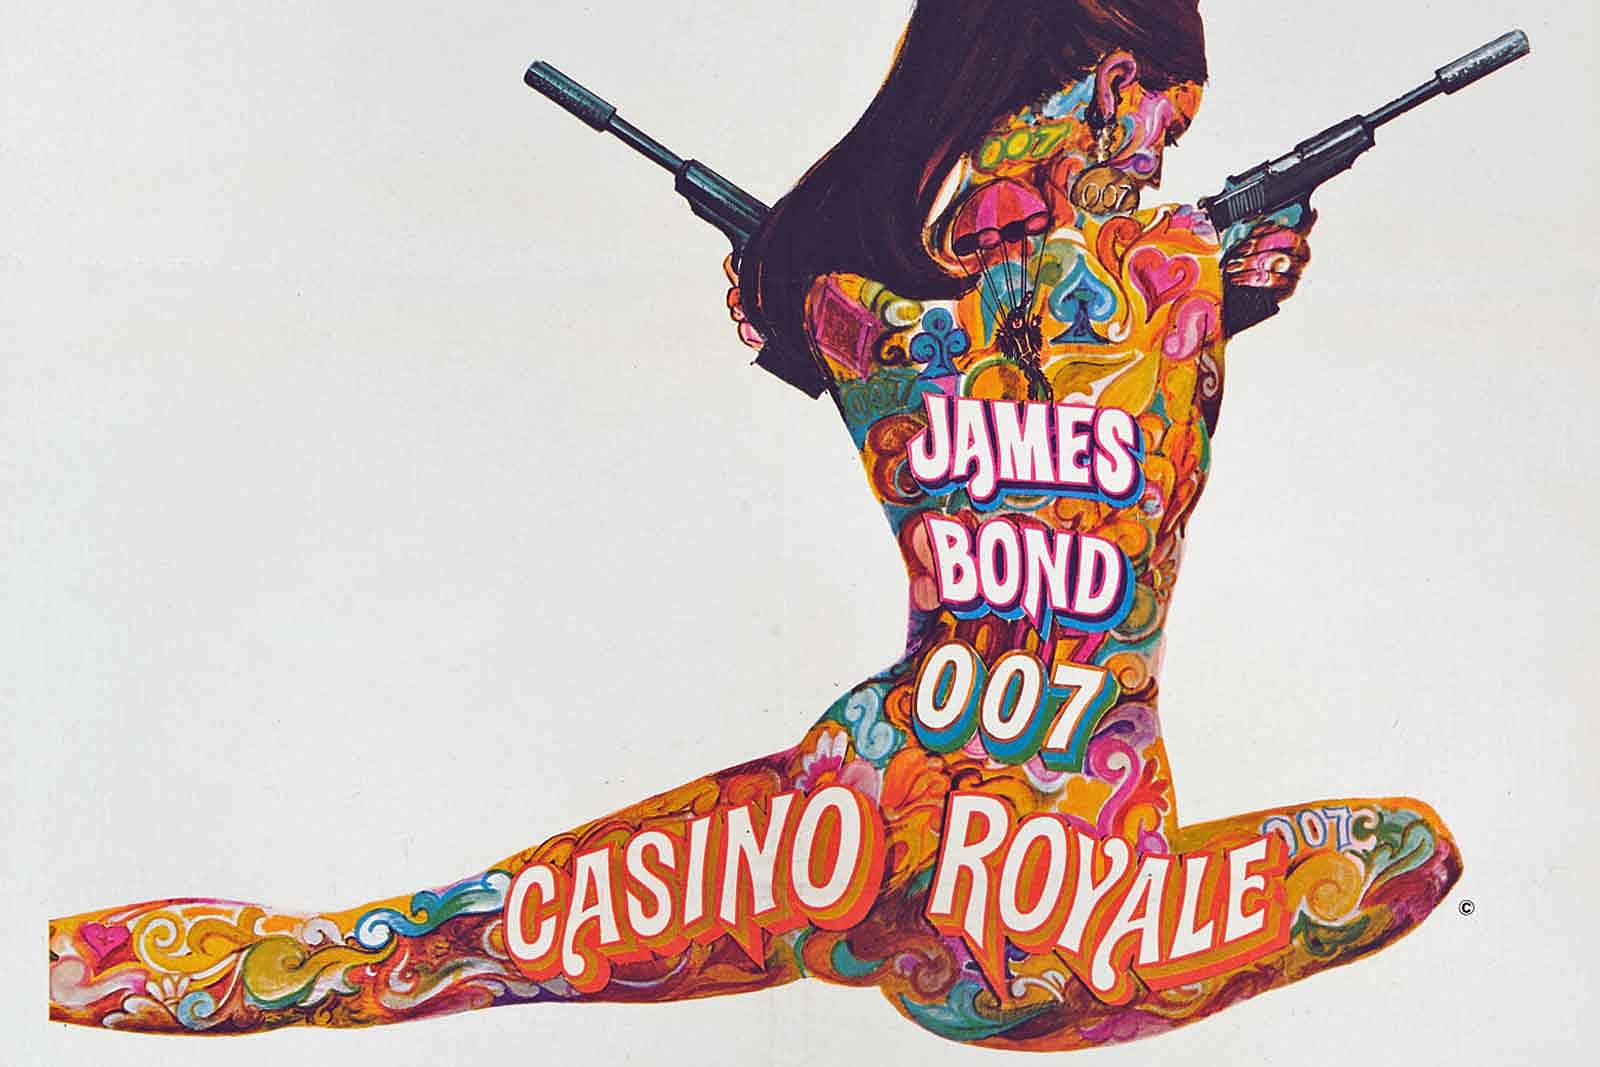 james bond casino royale book